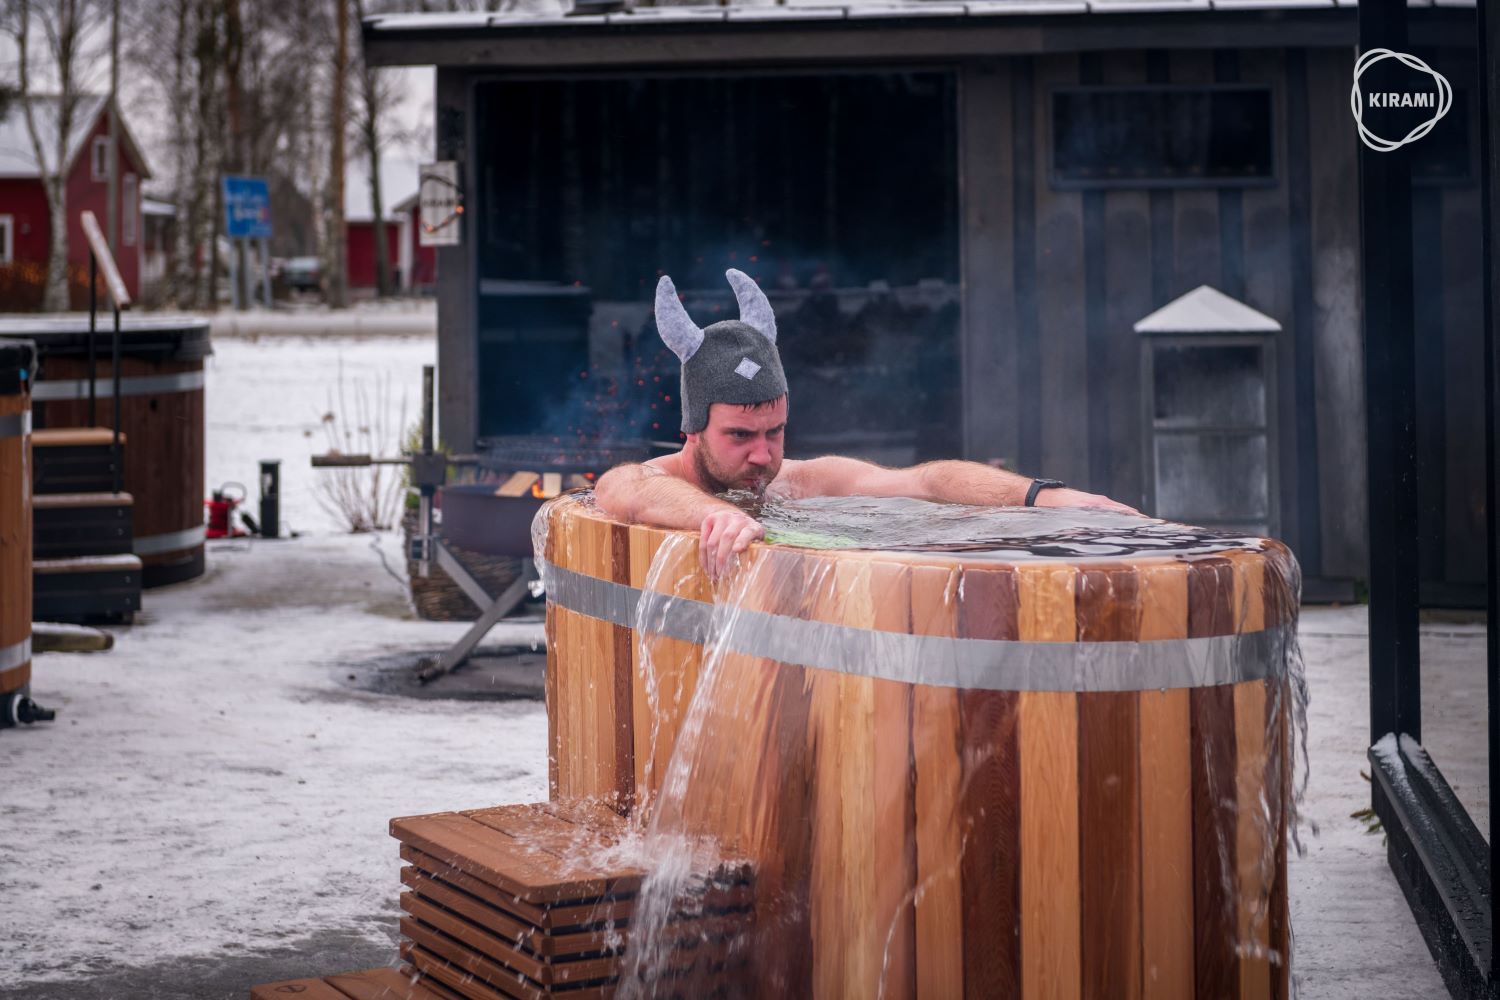 homme-bain-nordique-hiver-viking.jpg